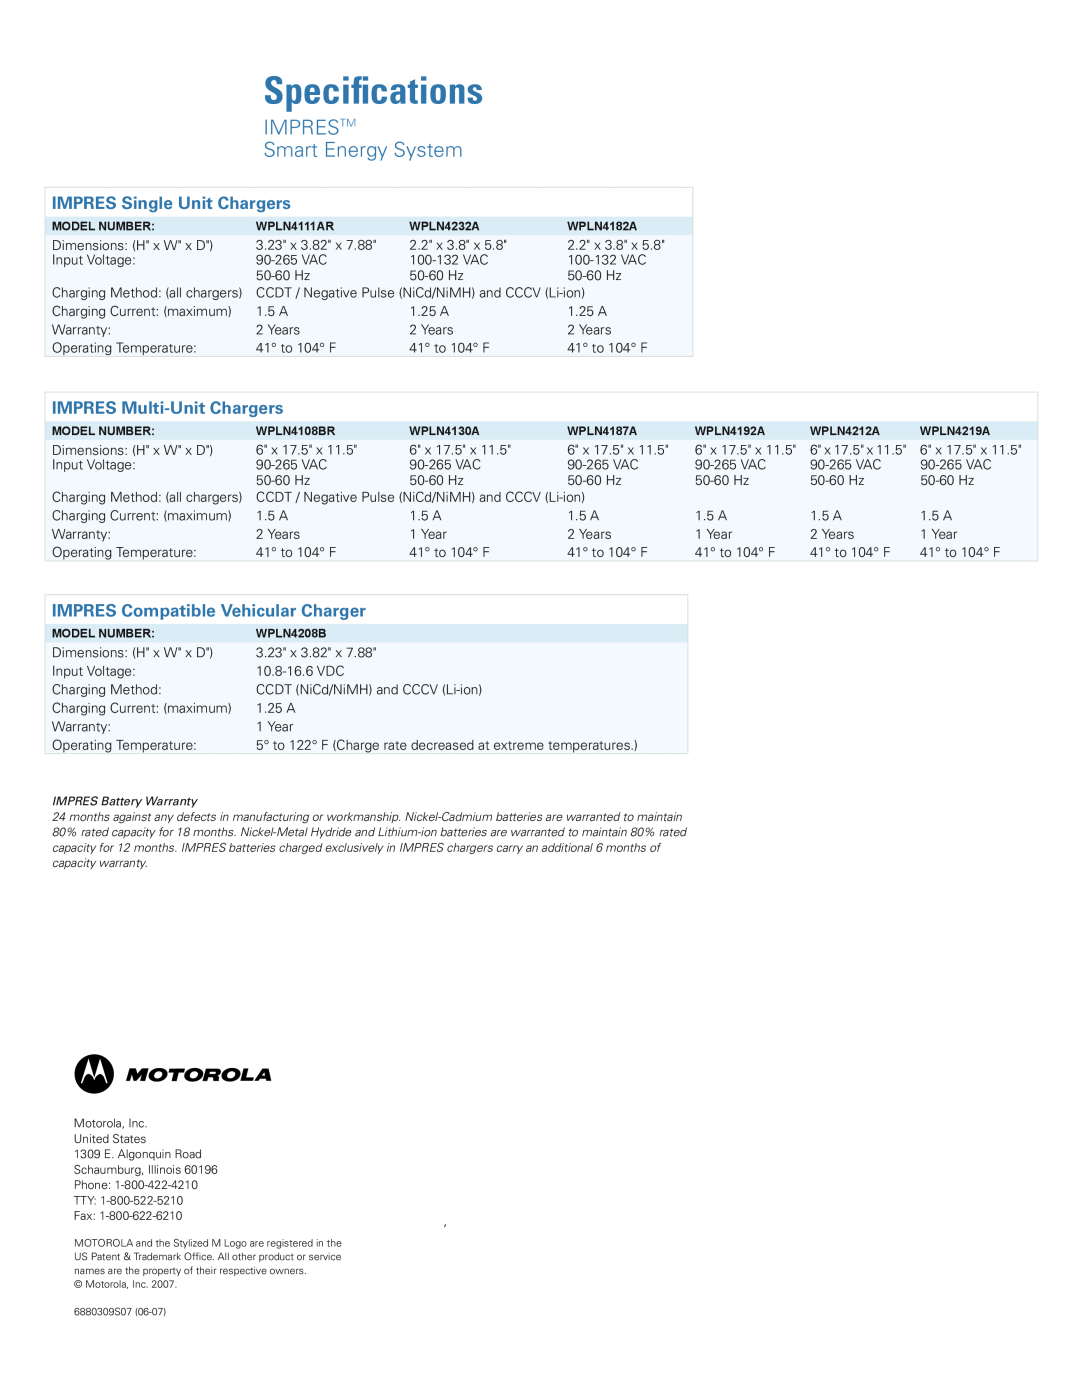 Motorola manual Speciﬁcations, IMPRESTM Smart Energy System, IMPRES Single Unit Chargers, IMPRES Multi-Unit Chargers 